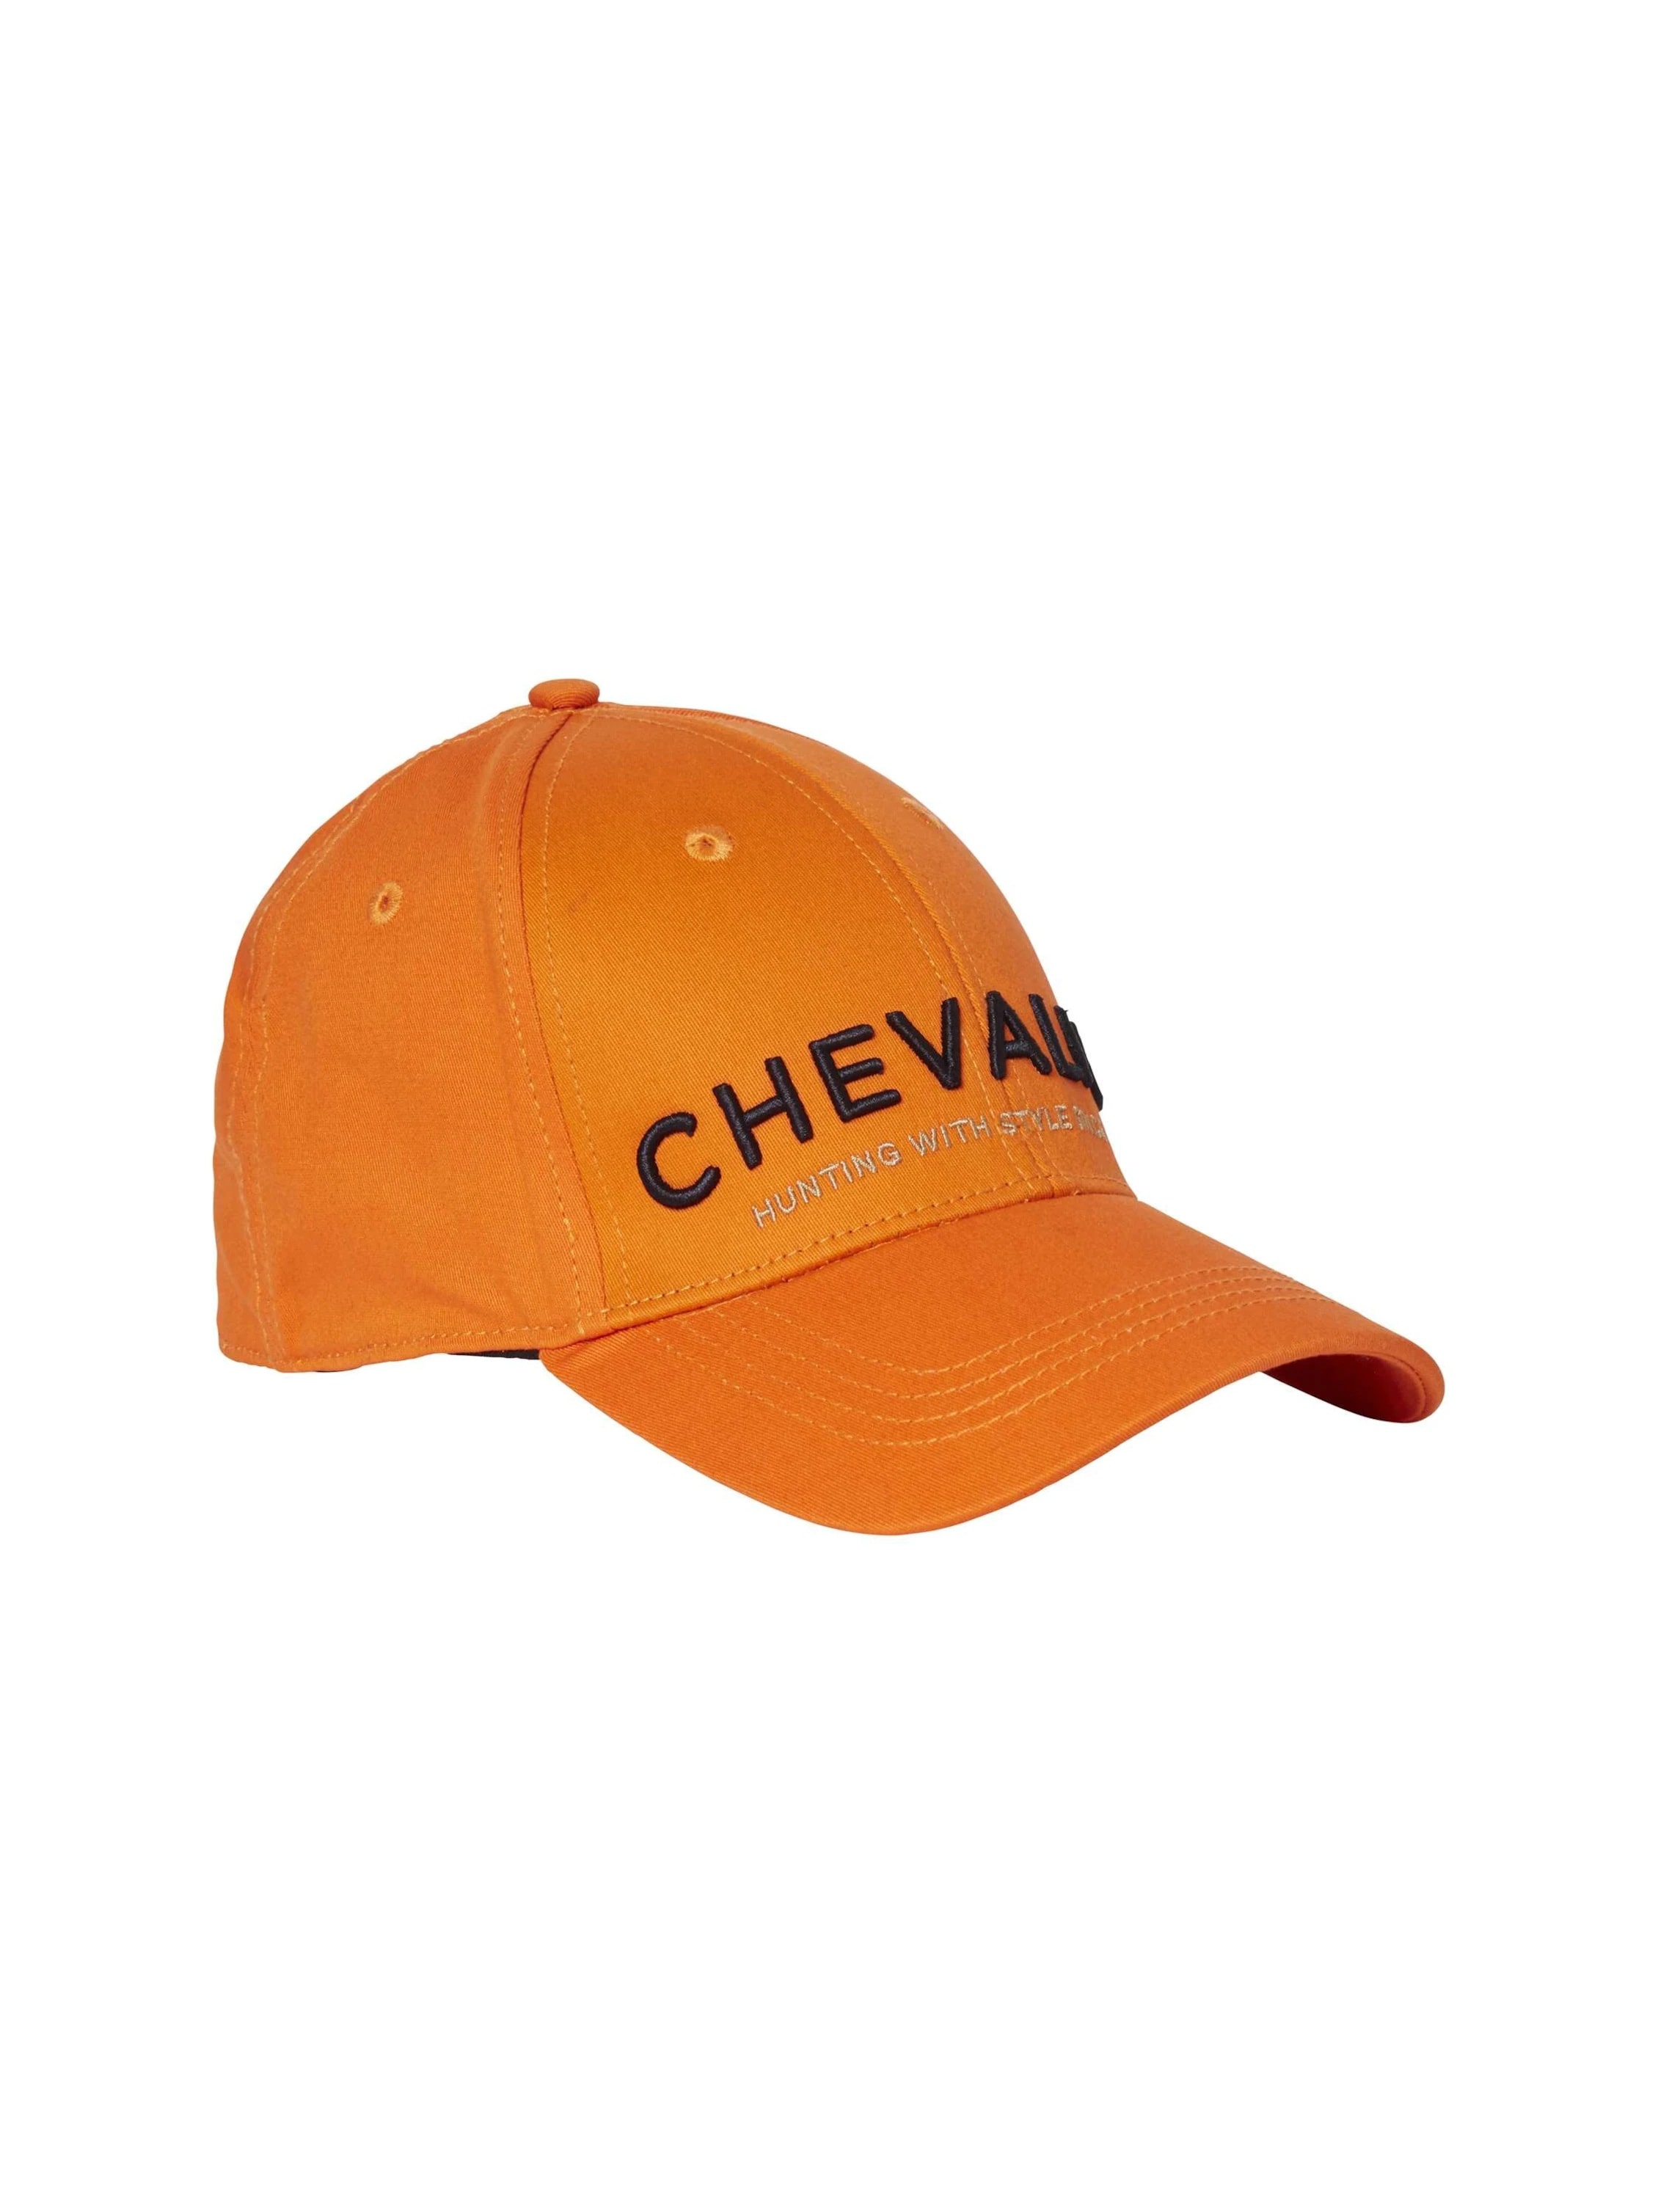 Chevalier Foxhill Caps